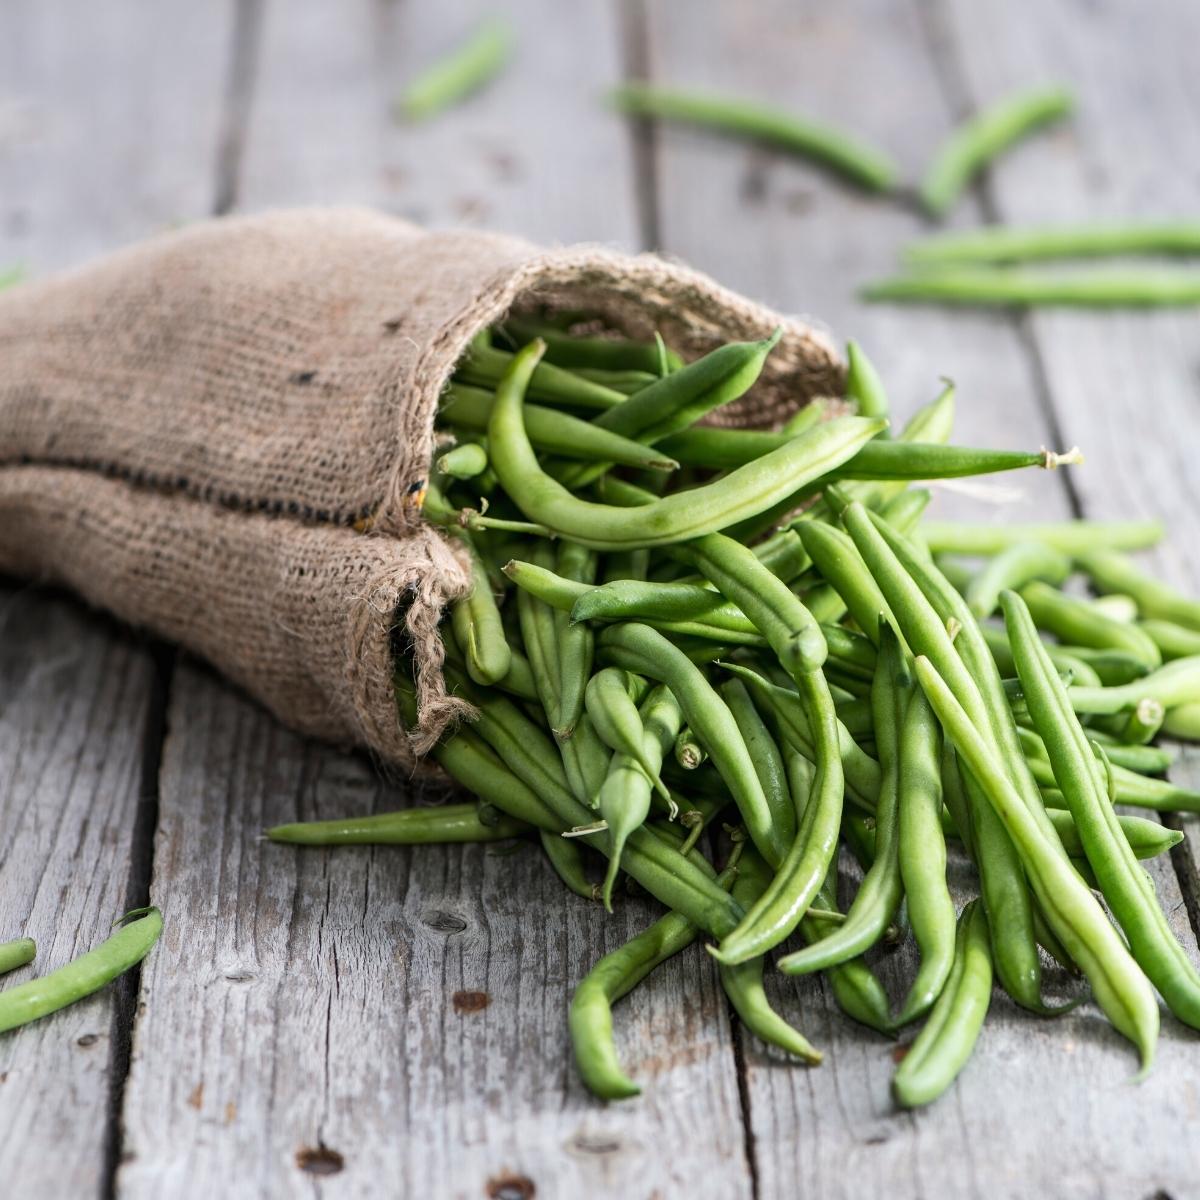 greens beans as celery alternative.